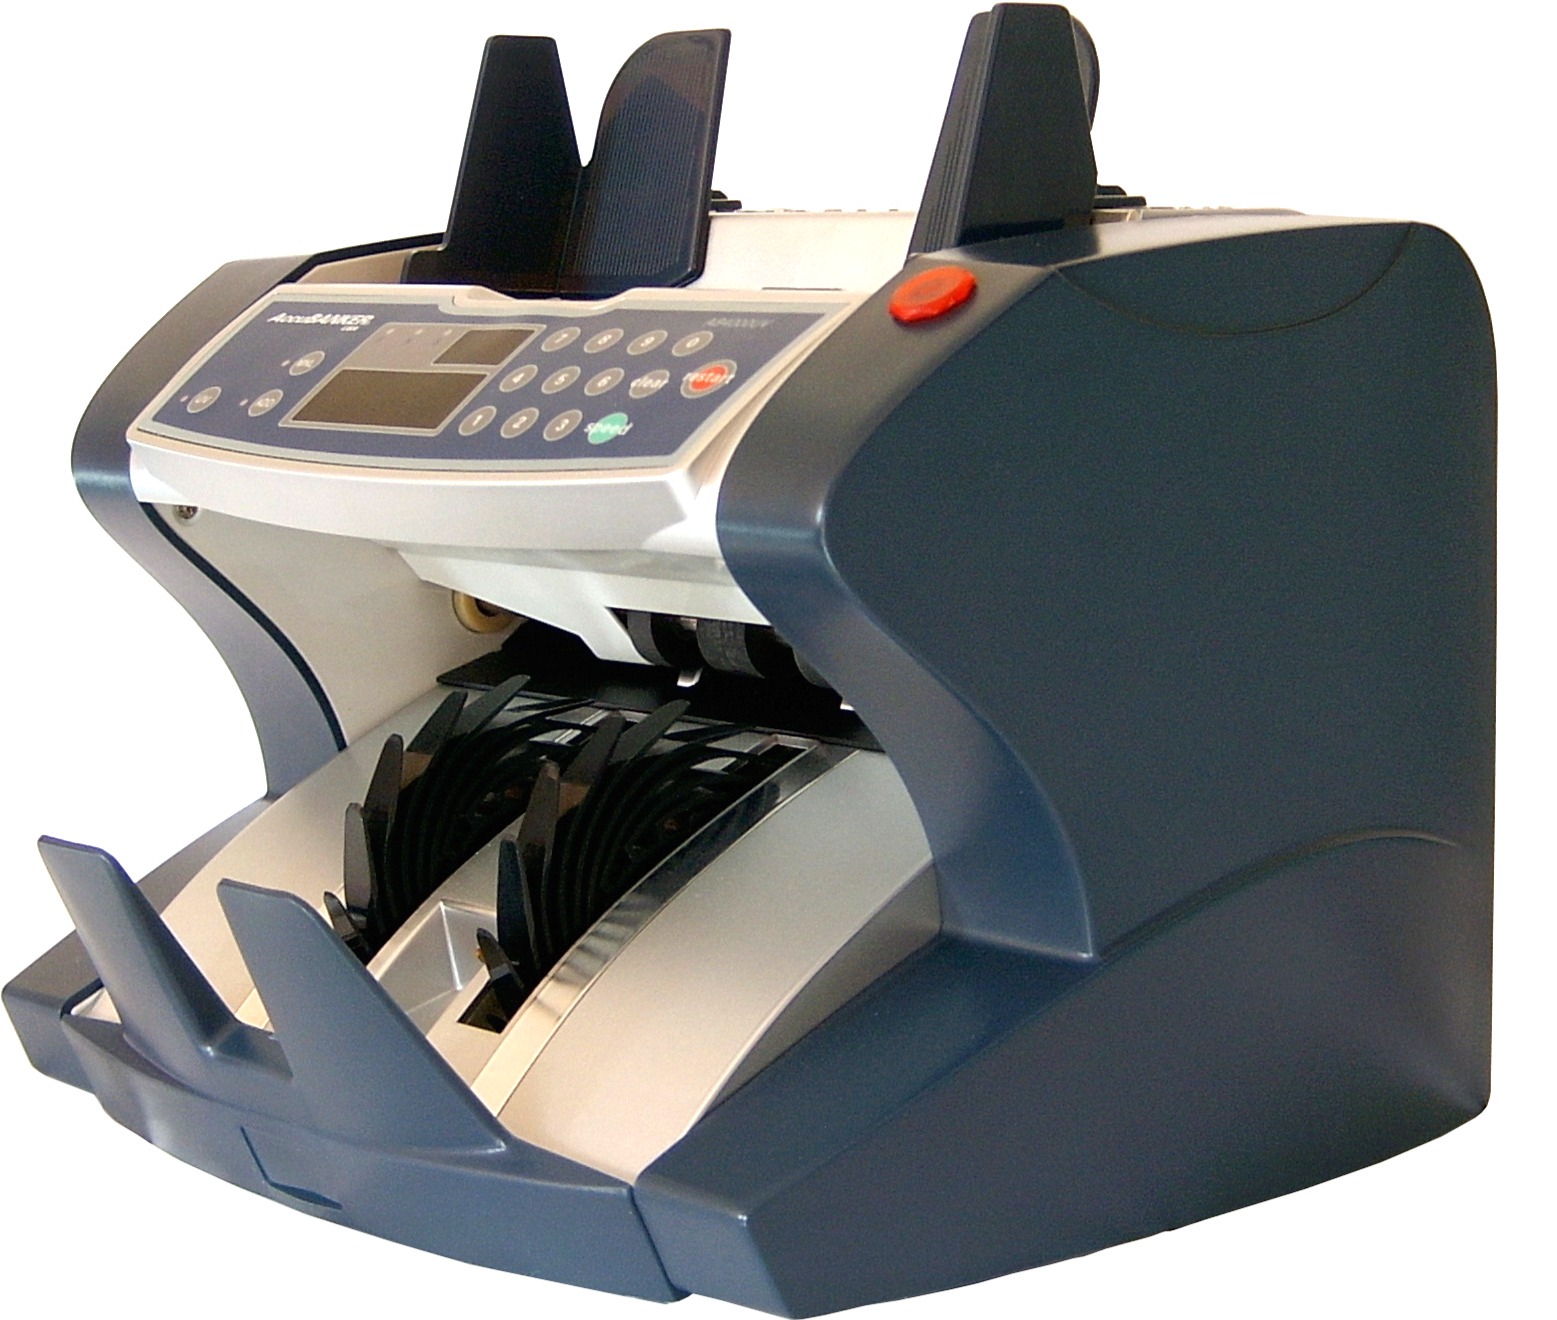 Počítačka bankovek AB-4000MG/UV s magnetickou a UV detekcí